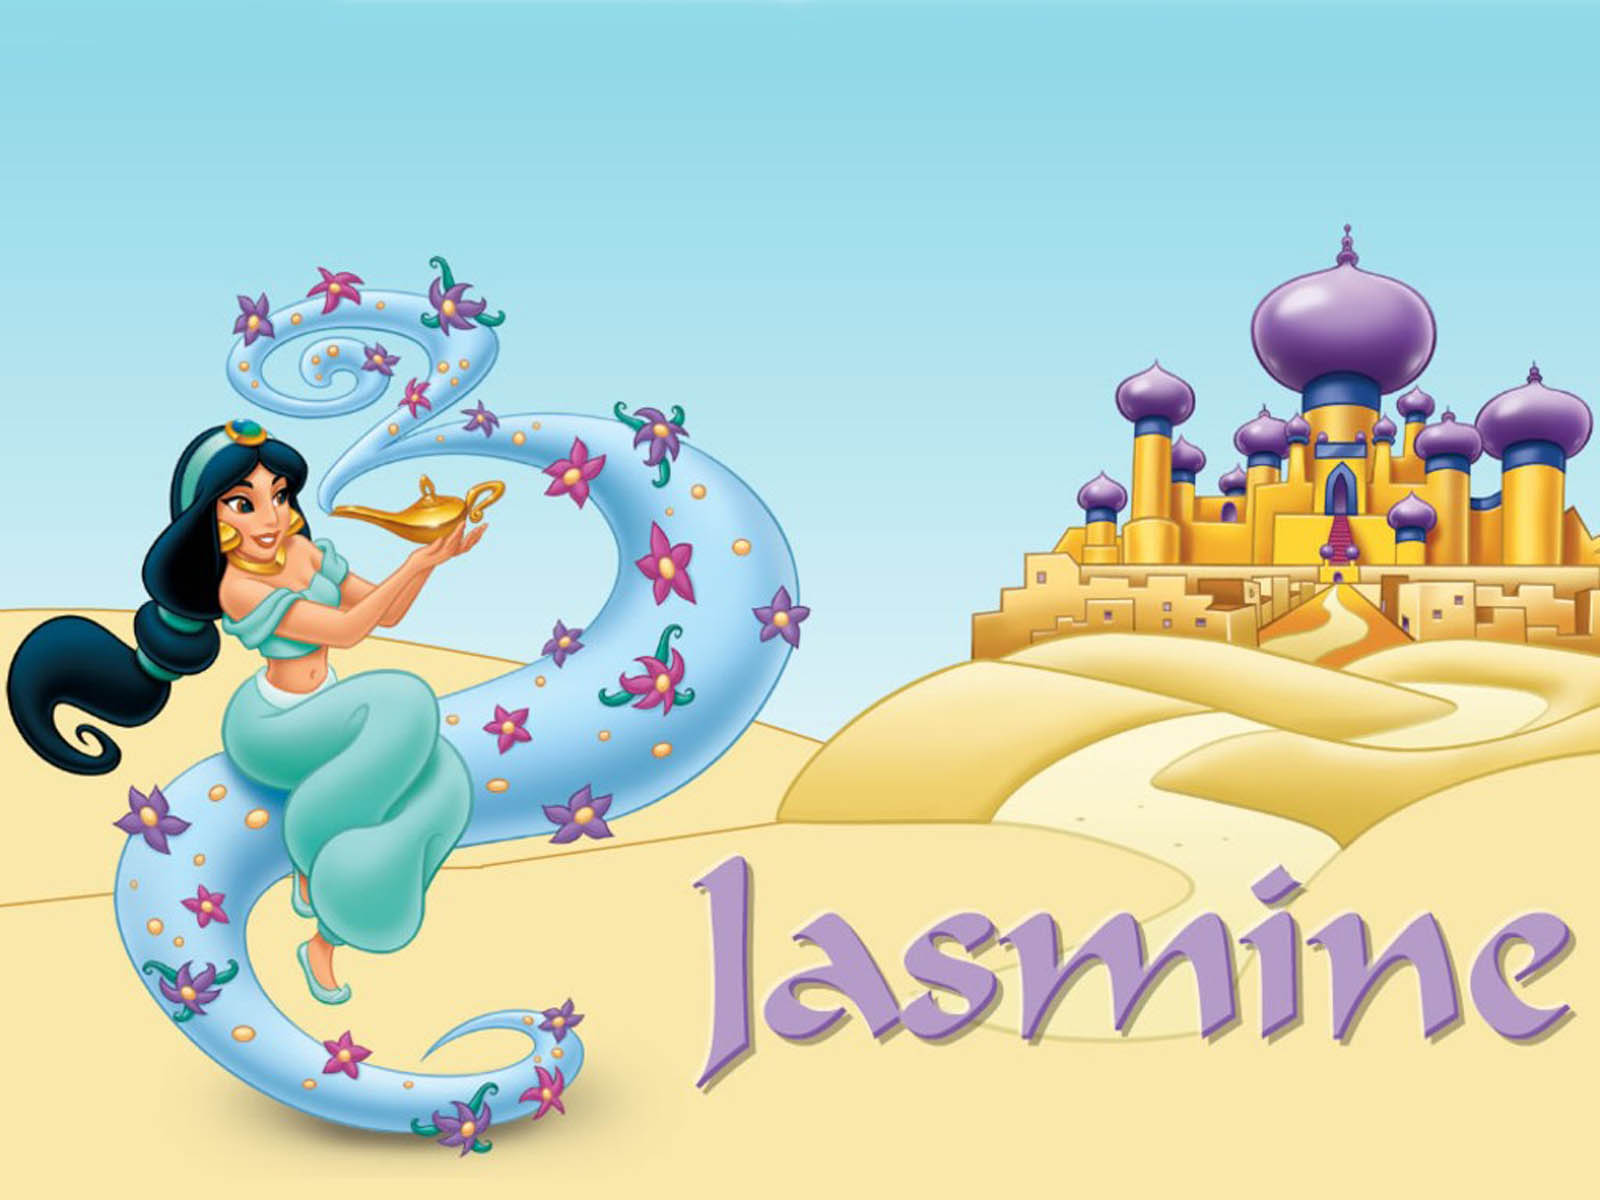 disney princess jasmine wallpaper